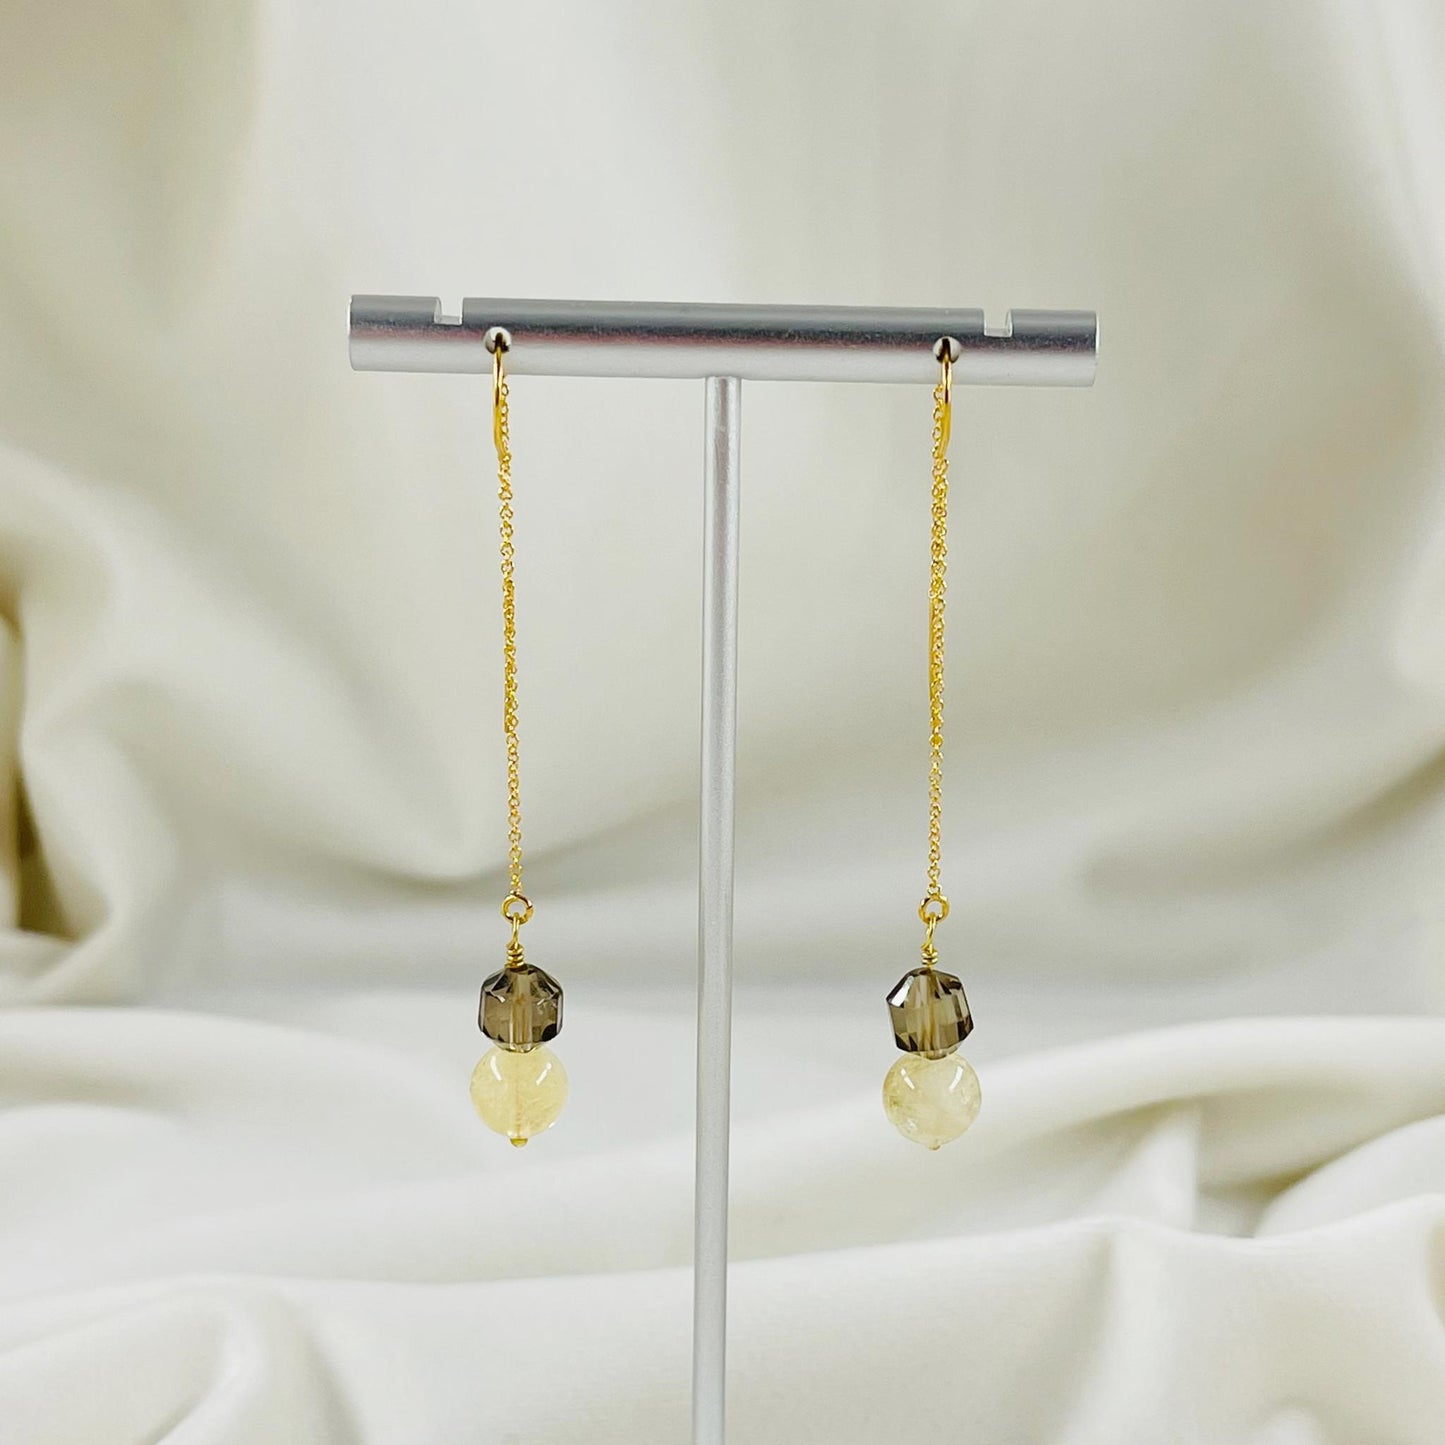 Maile Earrings-Threader Earrings-Smoky Quartz Gemstone-Citrine Gemstone-Gold Earrings-Carabella By Cheryl